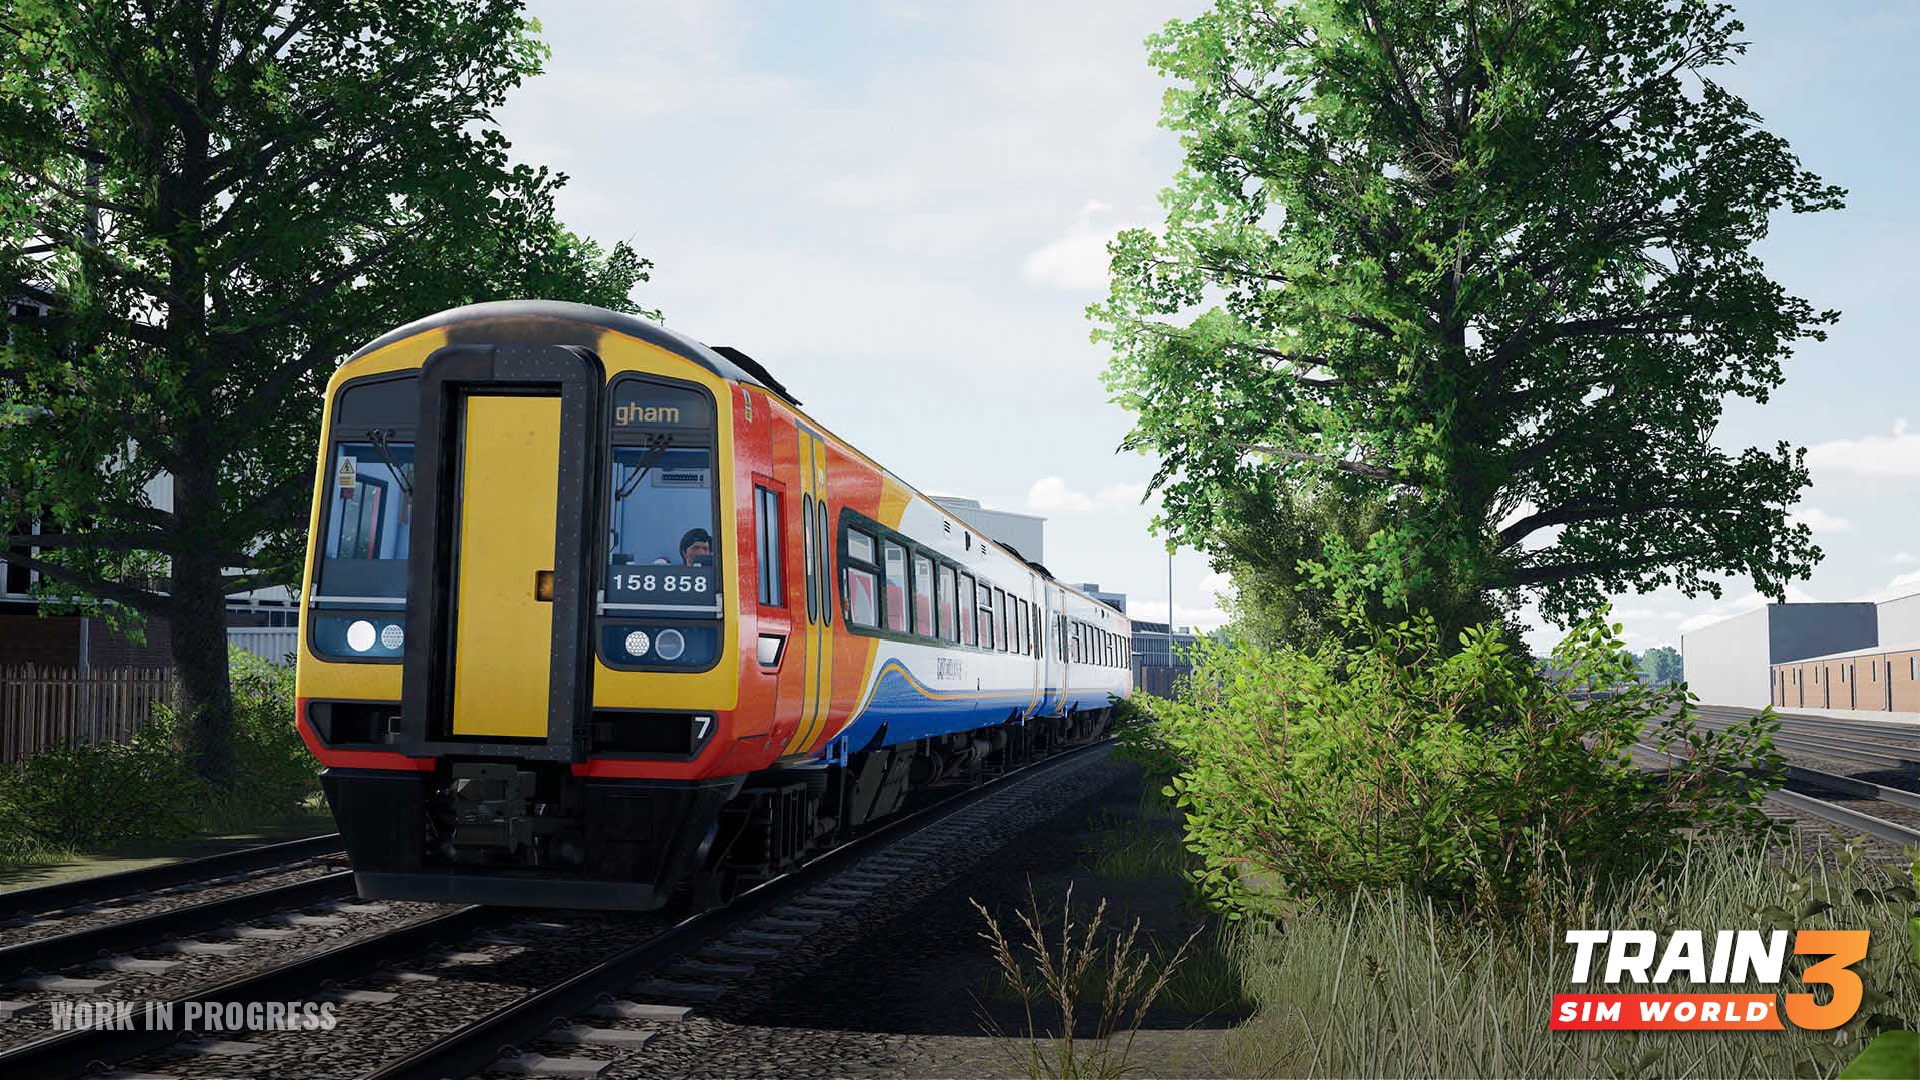 Train Sim World 3 Update 1.39